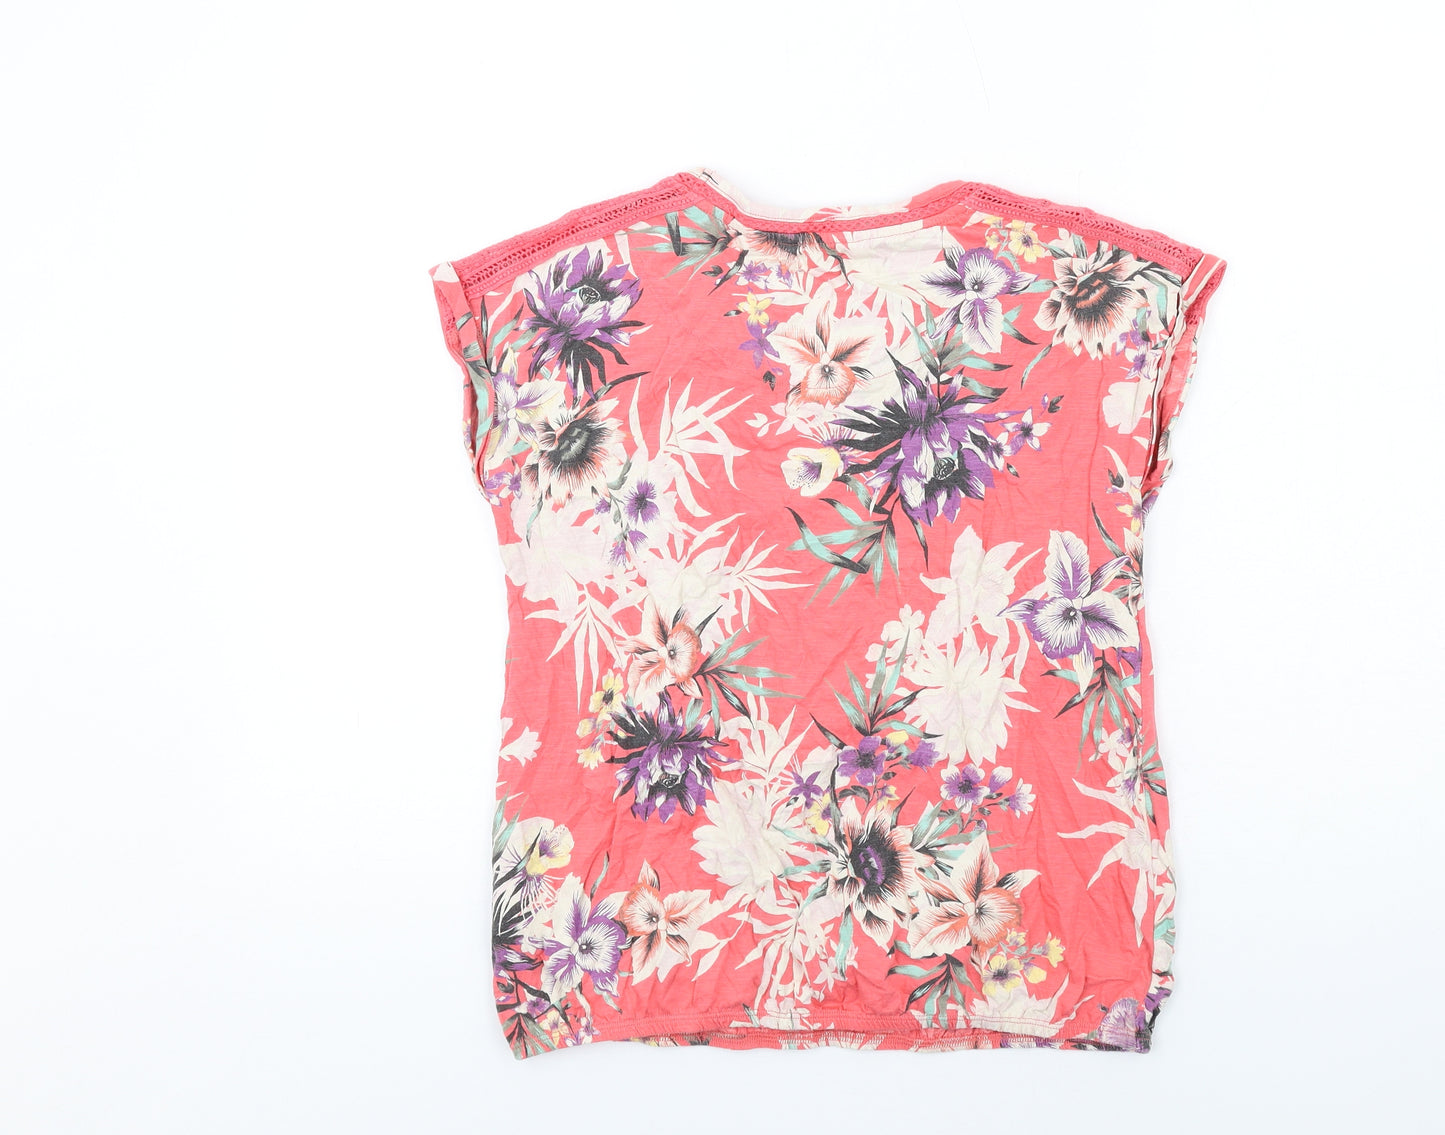 NEXT Womens Pink Floral Cotton Basic T-Shirt Size 12 Round Neck - Crochet Detail